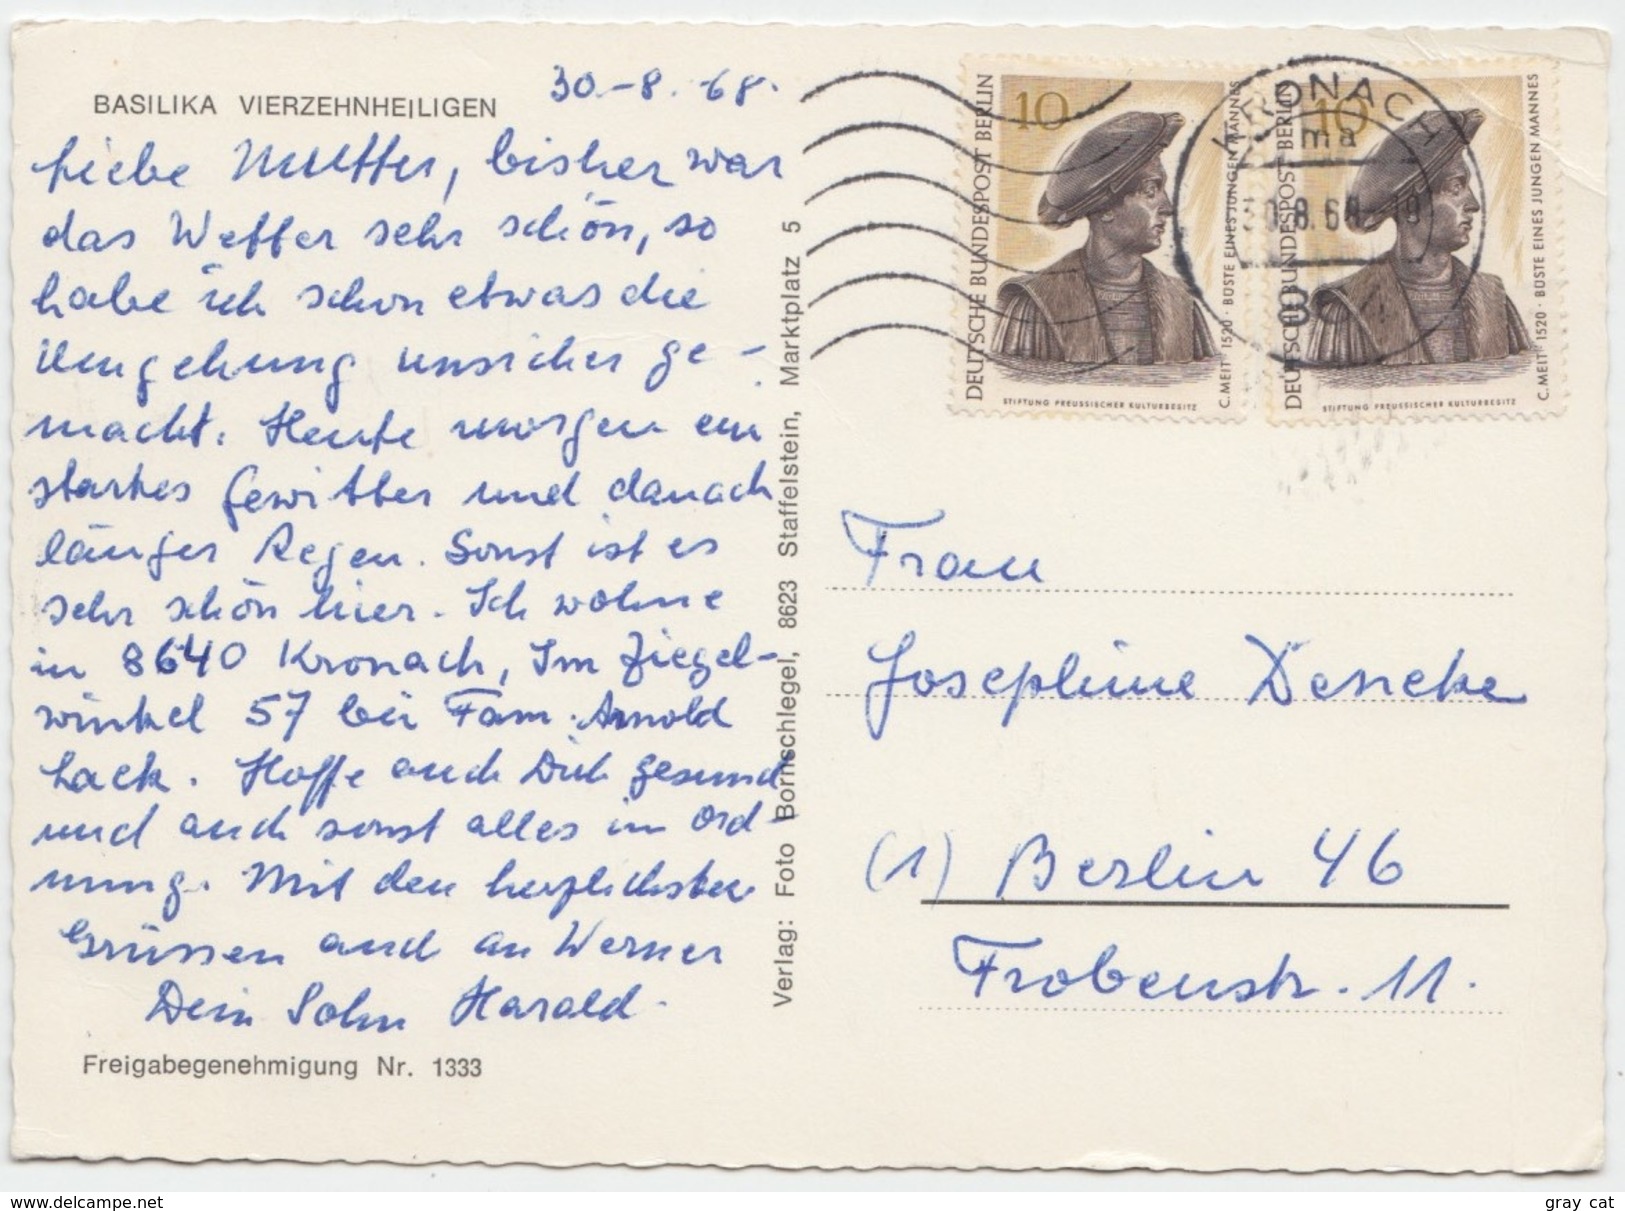 BASILIKA VIERZEHNHEILIGEN, Germany, 1968 Used Postcard [20607] - Staffelstein